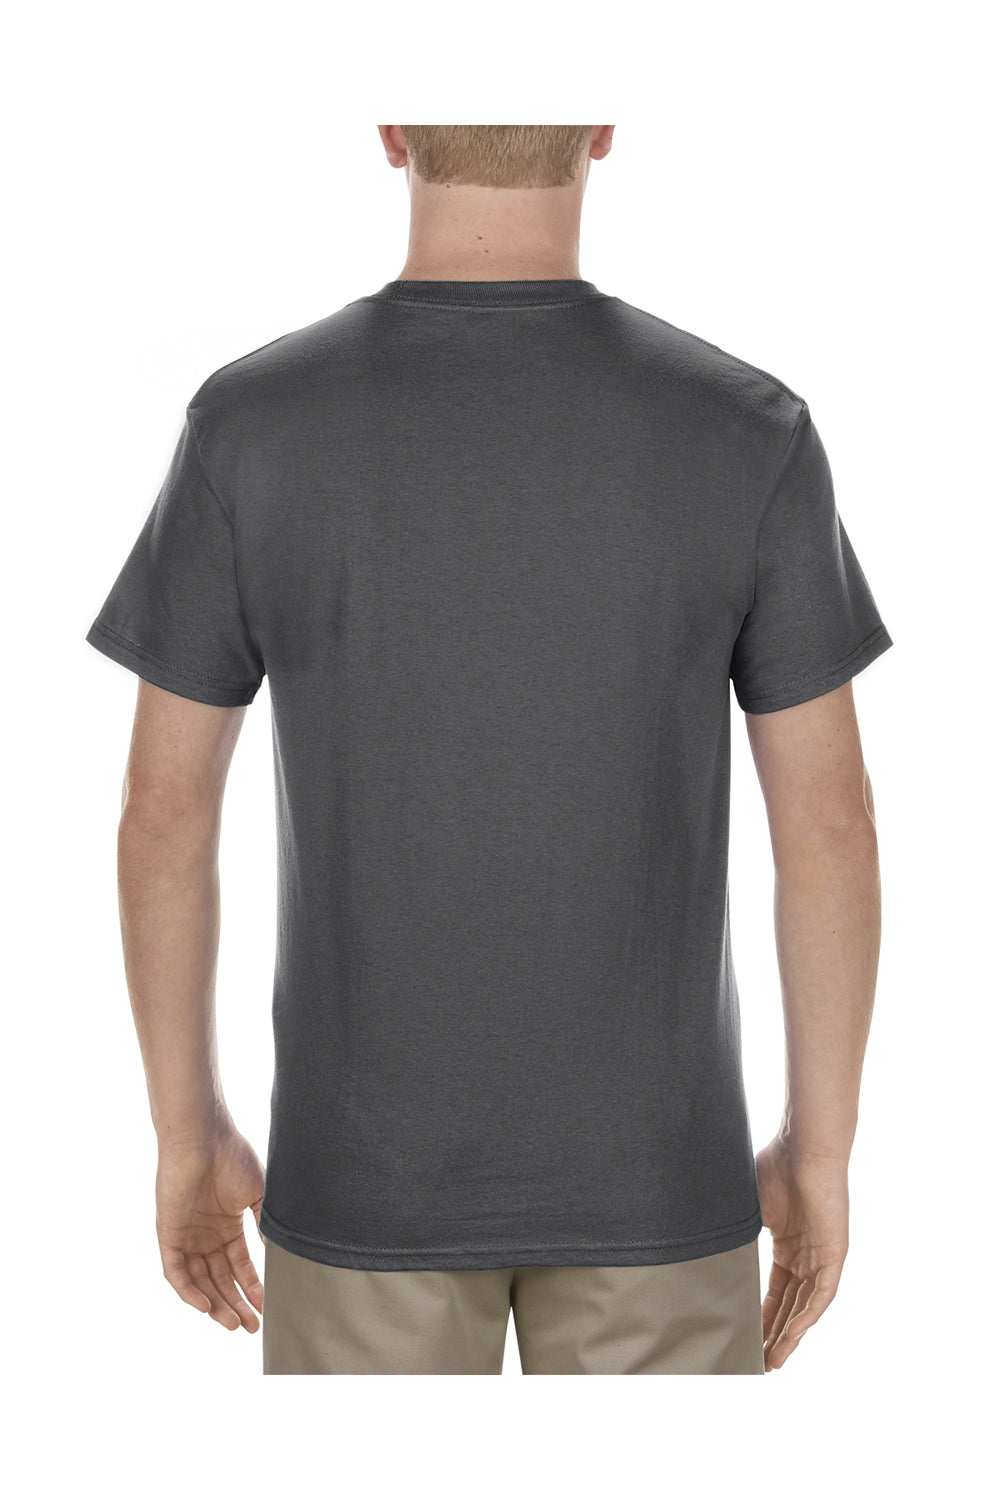 Alstyle AL1901 Mens Short Sleeve Crewneck T-Shirt Heather Charcoal Grey Back